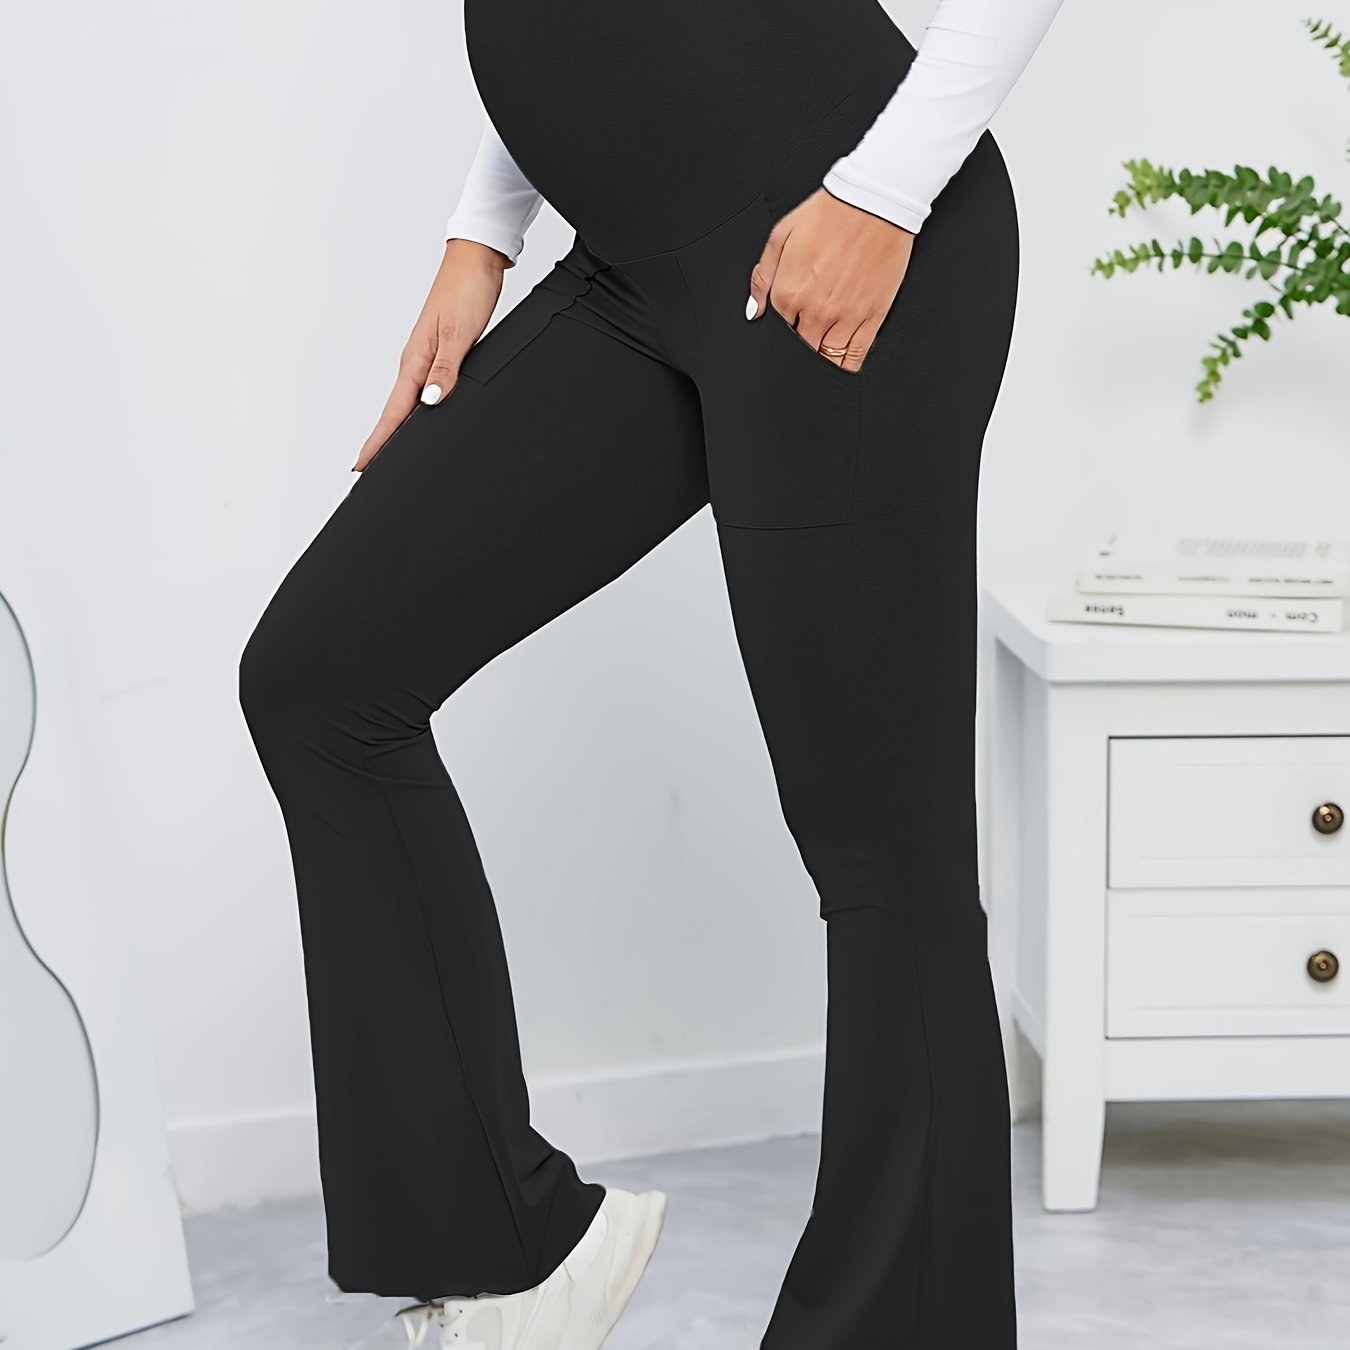 skpabo Leisure trousers for pregnant women, maternity leggings, pregnancy  trousers, comfortable stretch jogging bottoms